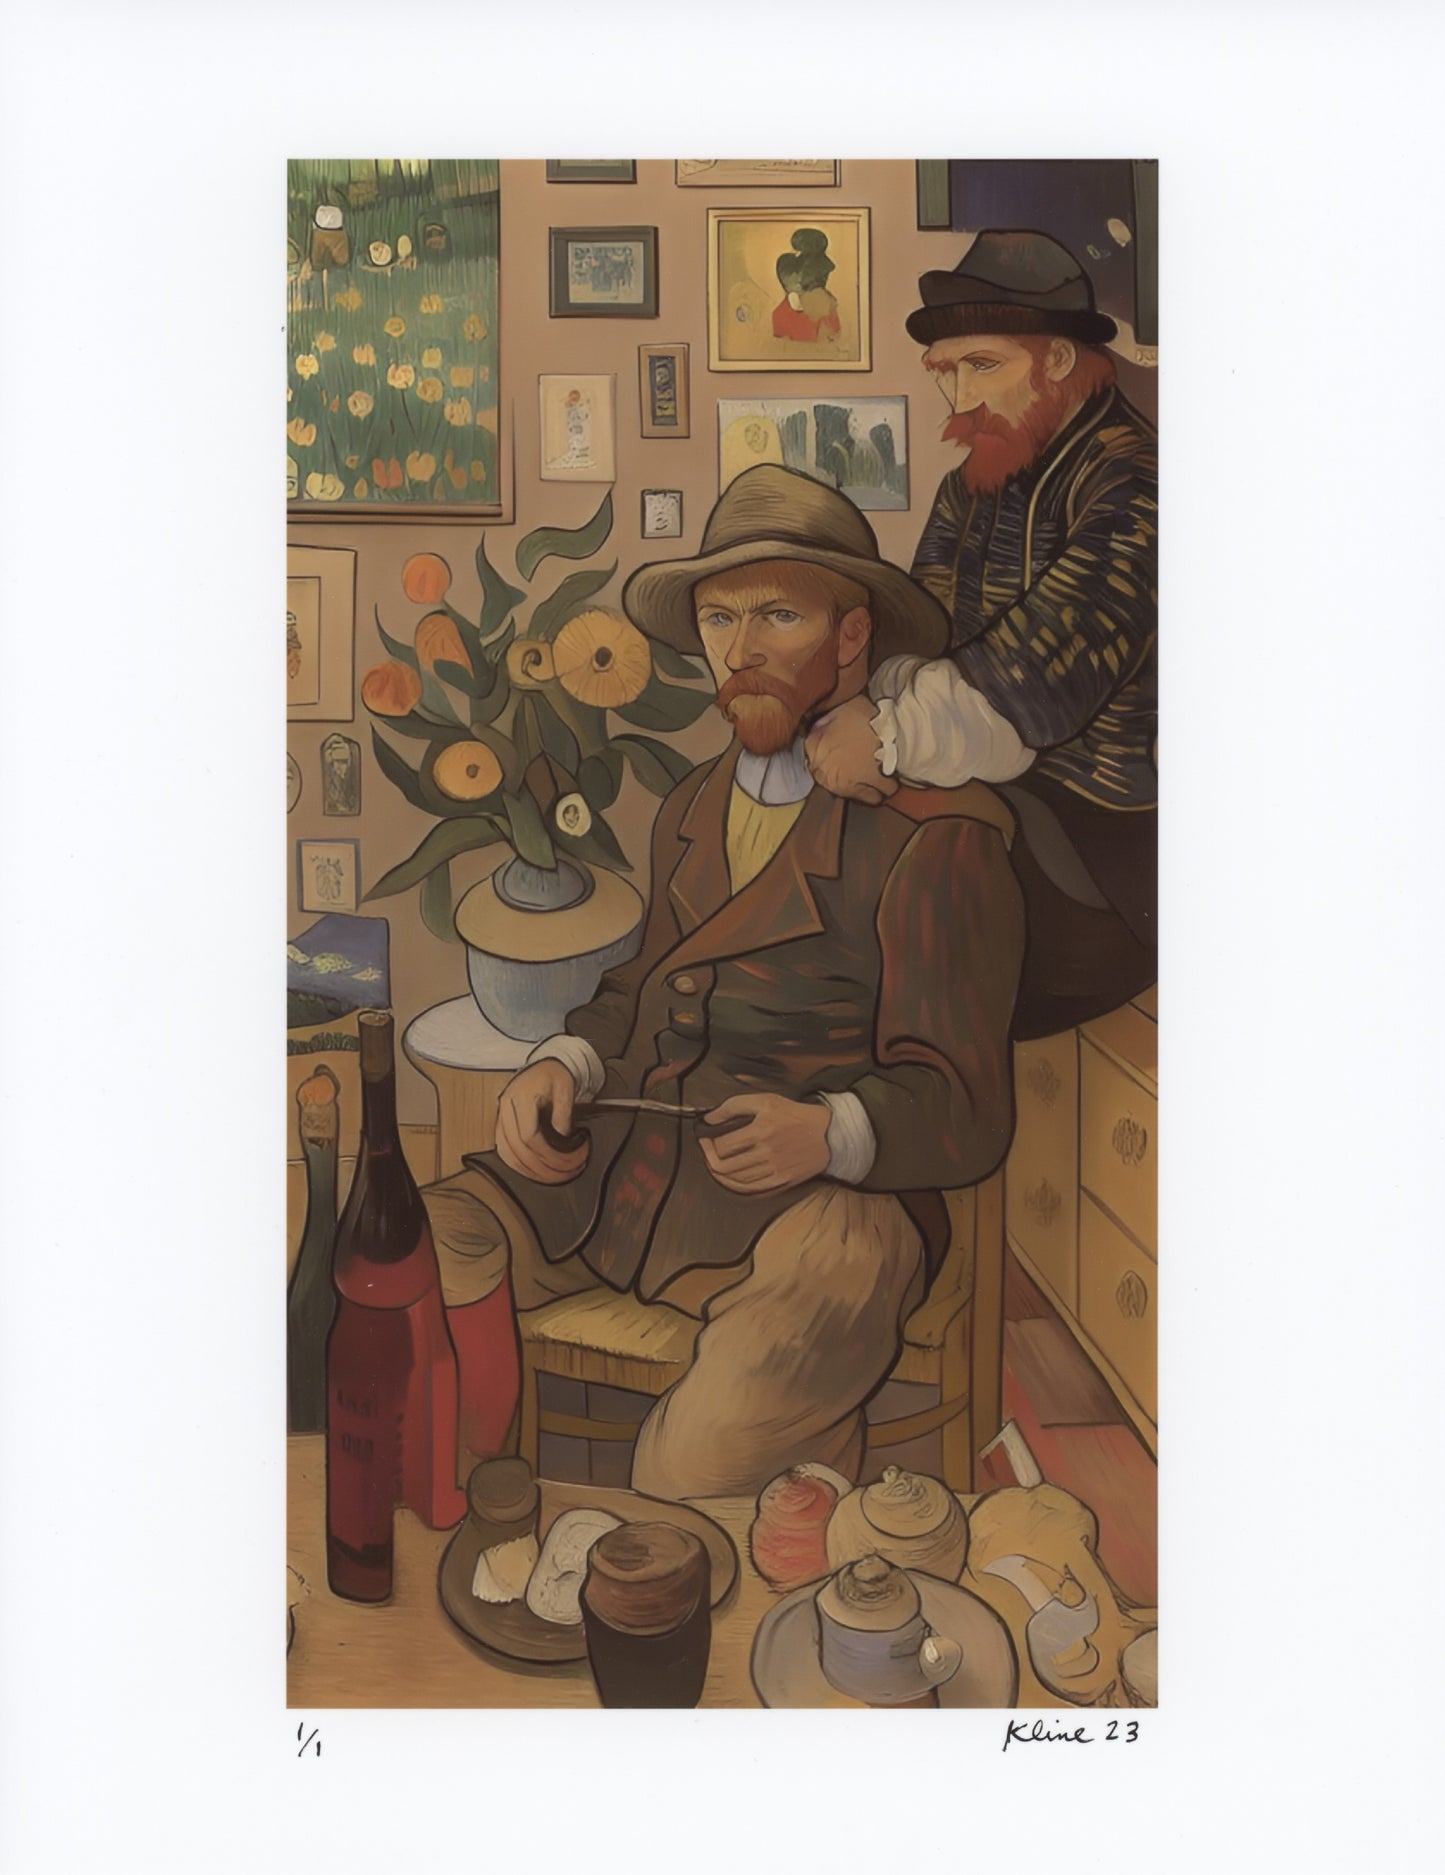 Vincent van Gogh in his Room. Digital Art Print. 8.5" x 11". 1/1 Edition. John Kline Artwork